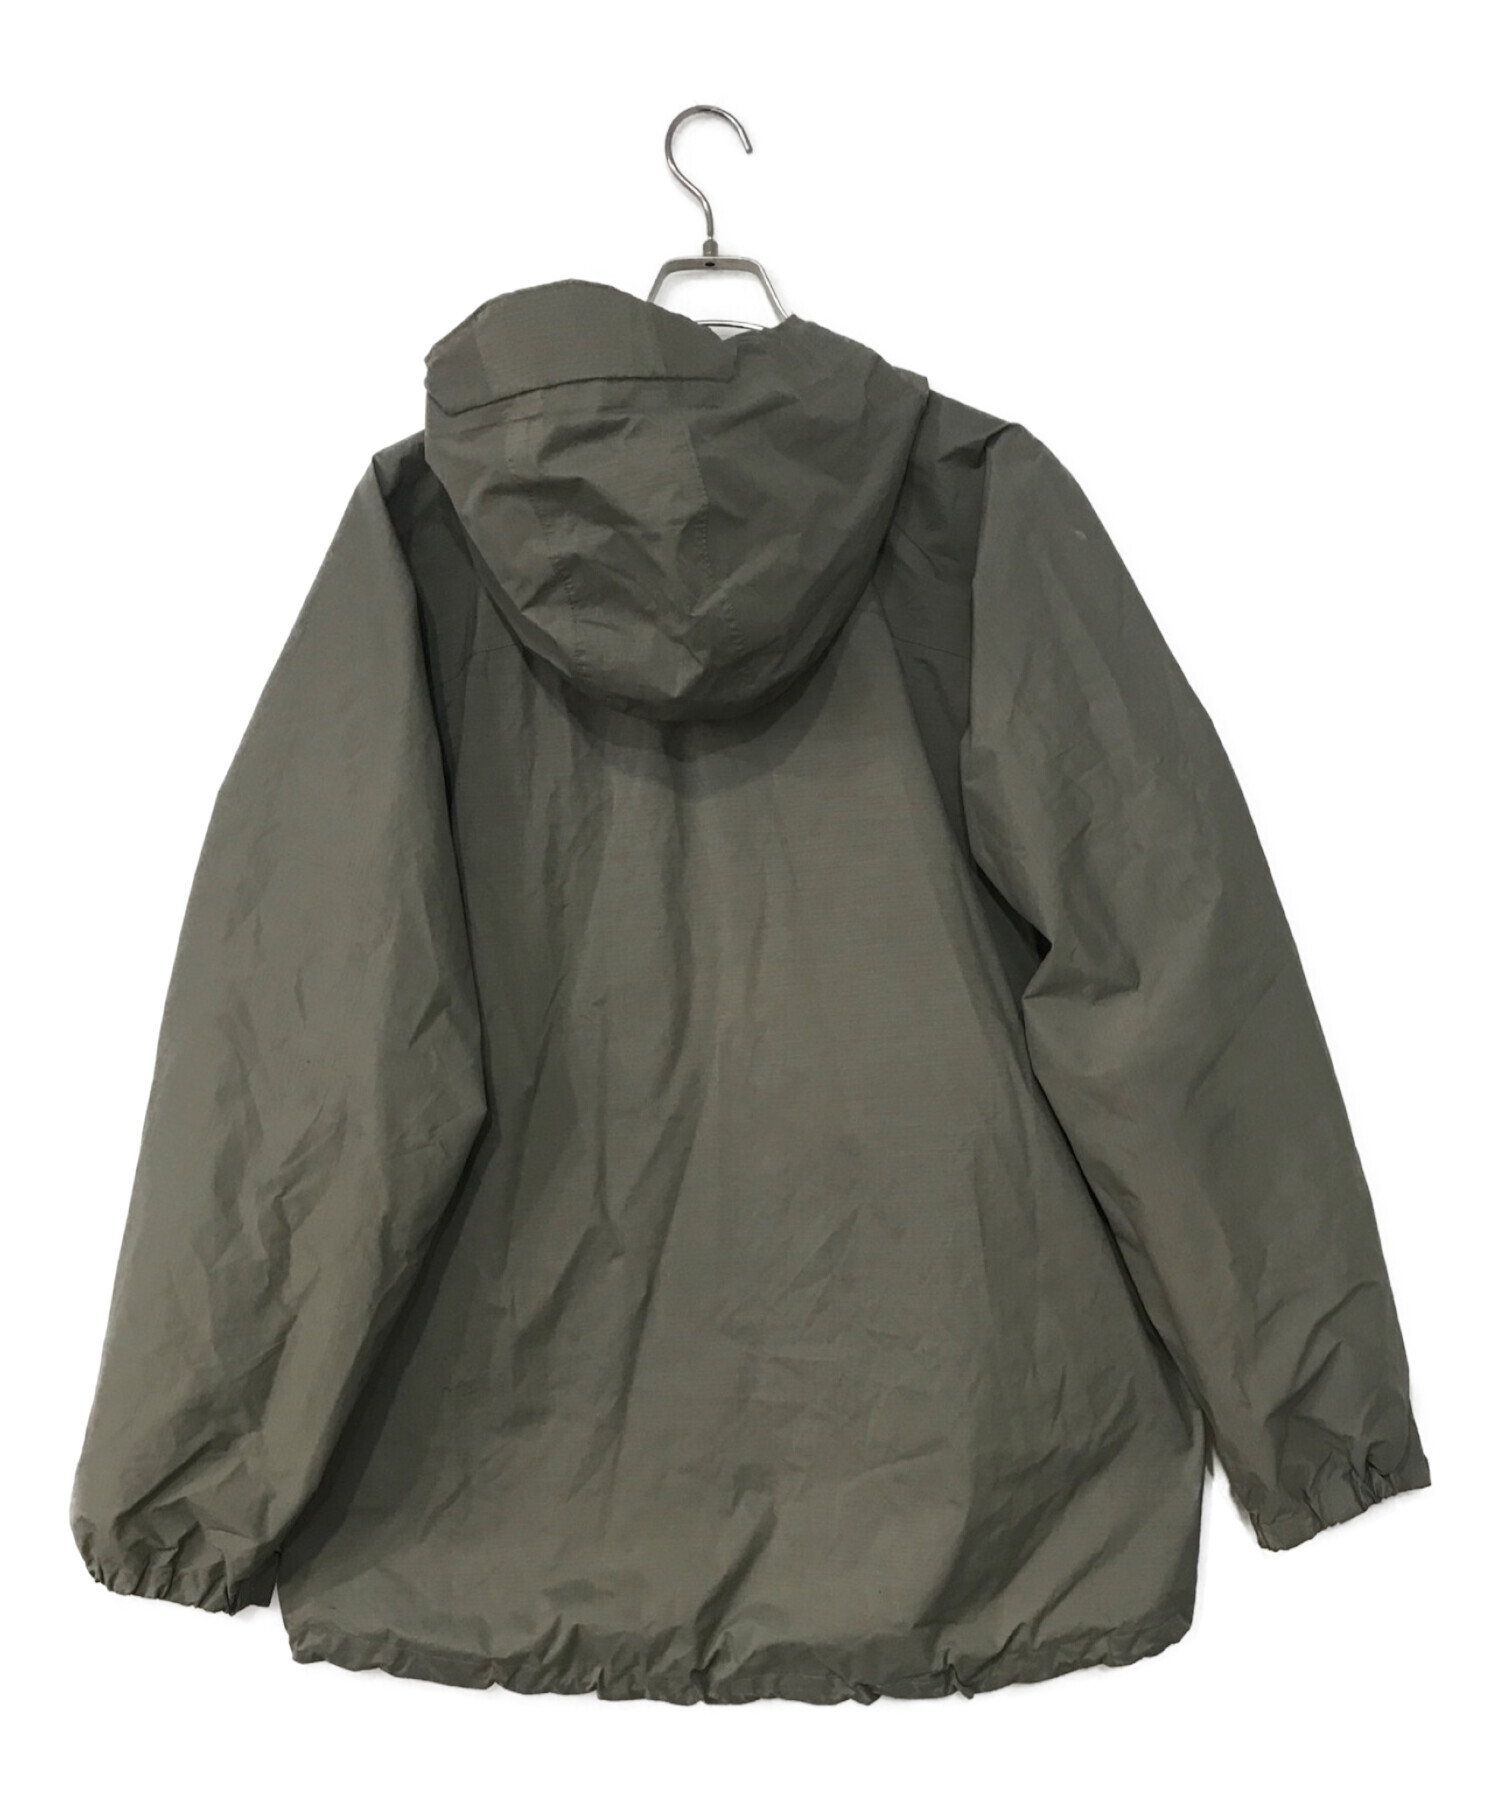 Patagonia (パタゴニア) level6 gore-Tex jacket グレー サイズ:Ｌ